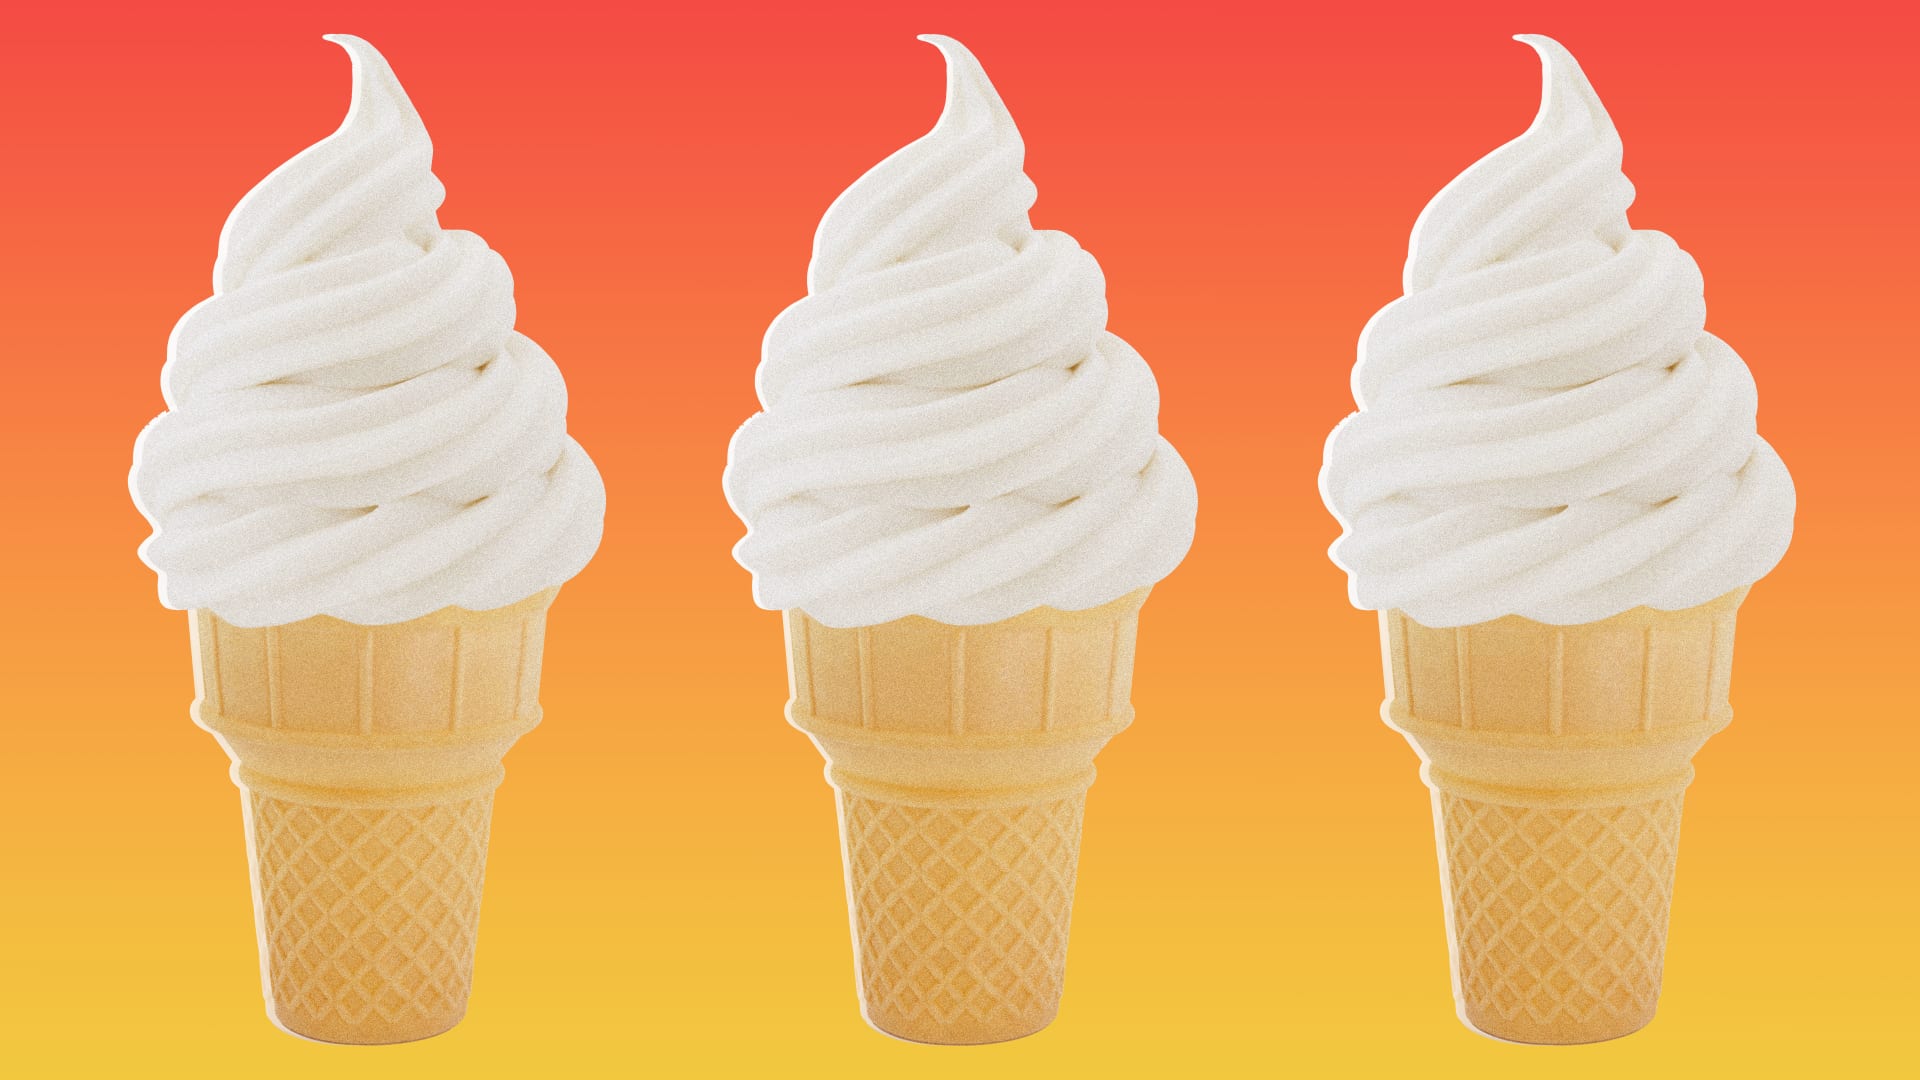 Ice Cream Machine Startup Kytch Just Sued McDonald's for $900 Million